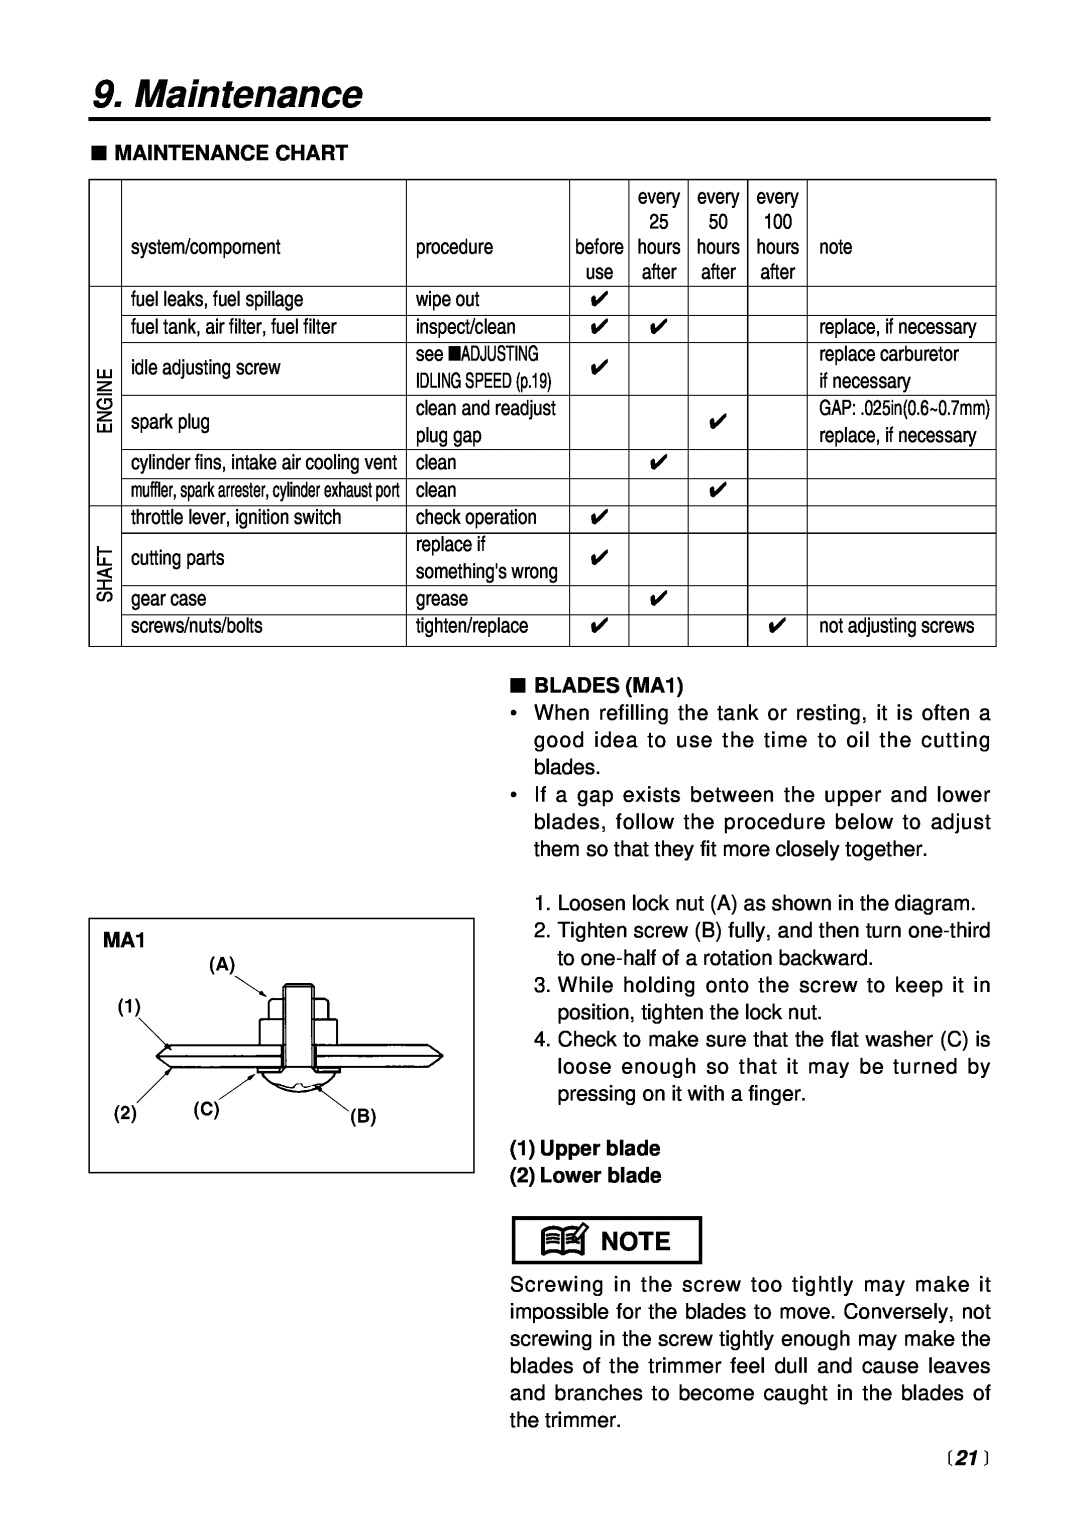 RedMax SRTZ2500 manual Maintenance Chart, BLADES MA1, Upper blade 2 Lower blade, 21  